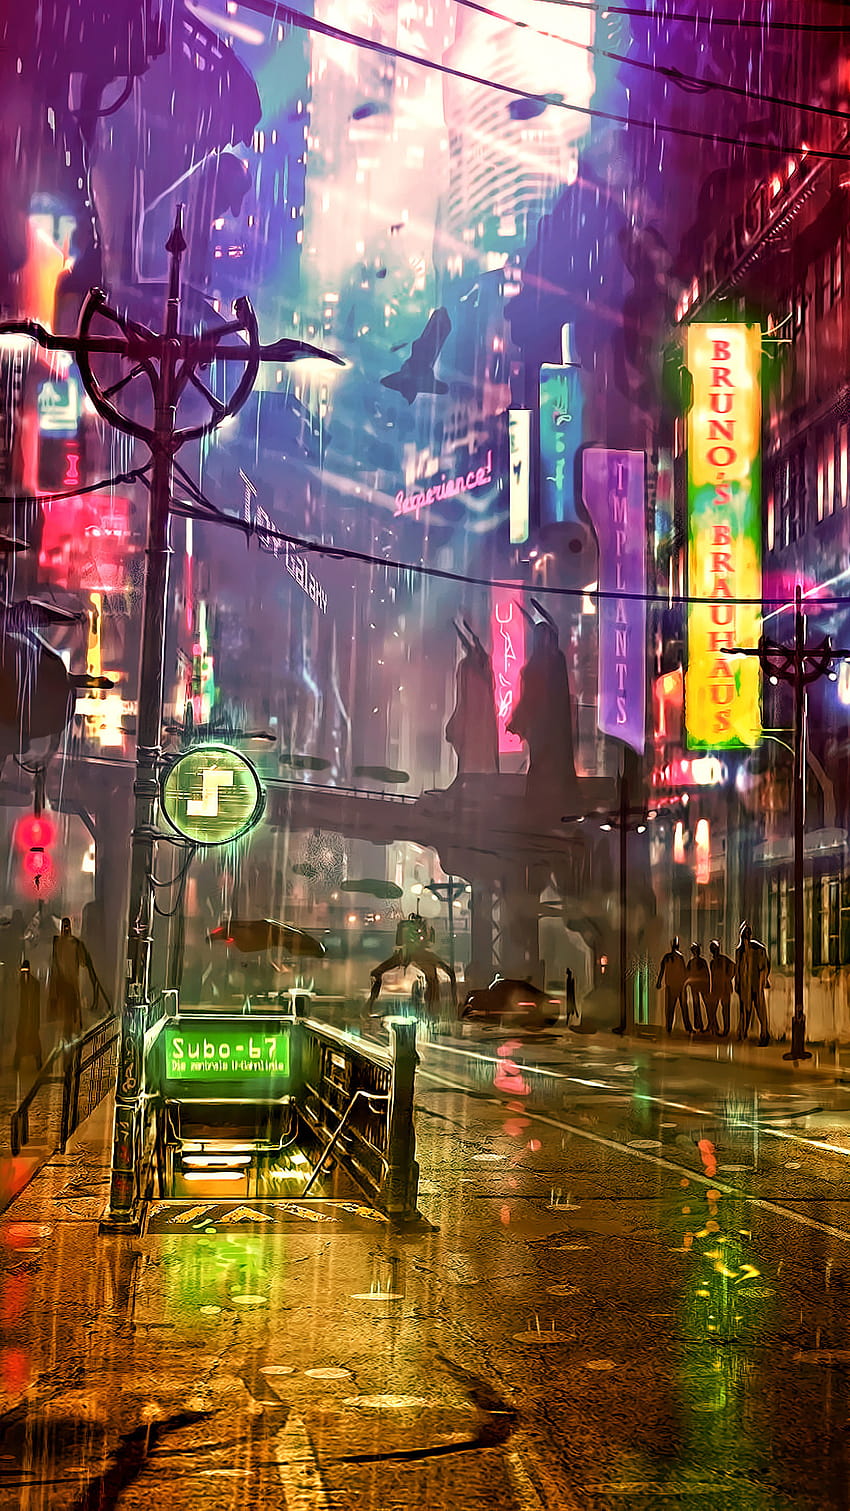 1080x1920 Futurystyczny Miasto Cyberpunk Neon Ulica Sztuka cyfrowa Iphone 7,6s,6 Plus, Pixel xl ,One Plus 3,3t,5 , Tła i, Pixel art telefon Tapeta na telefon HD